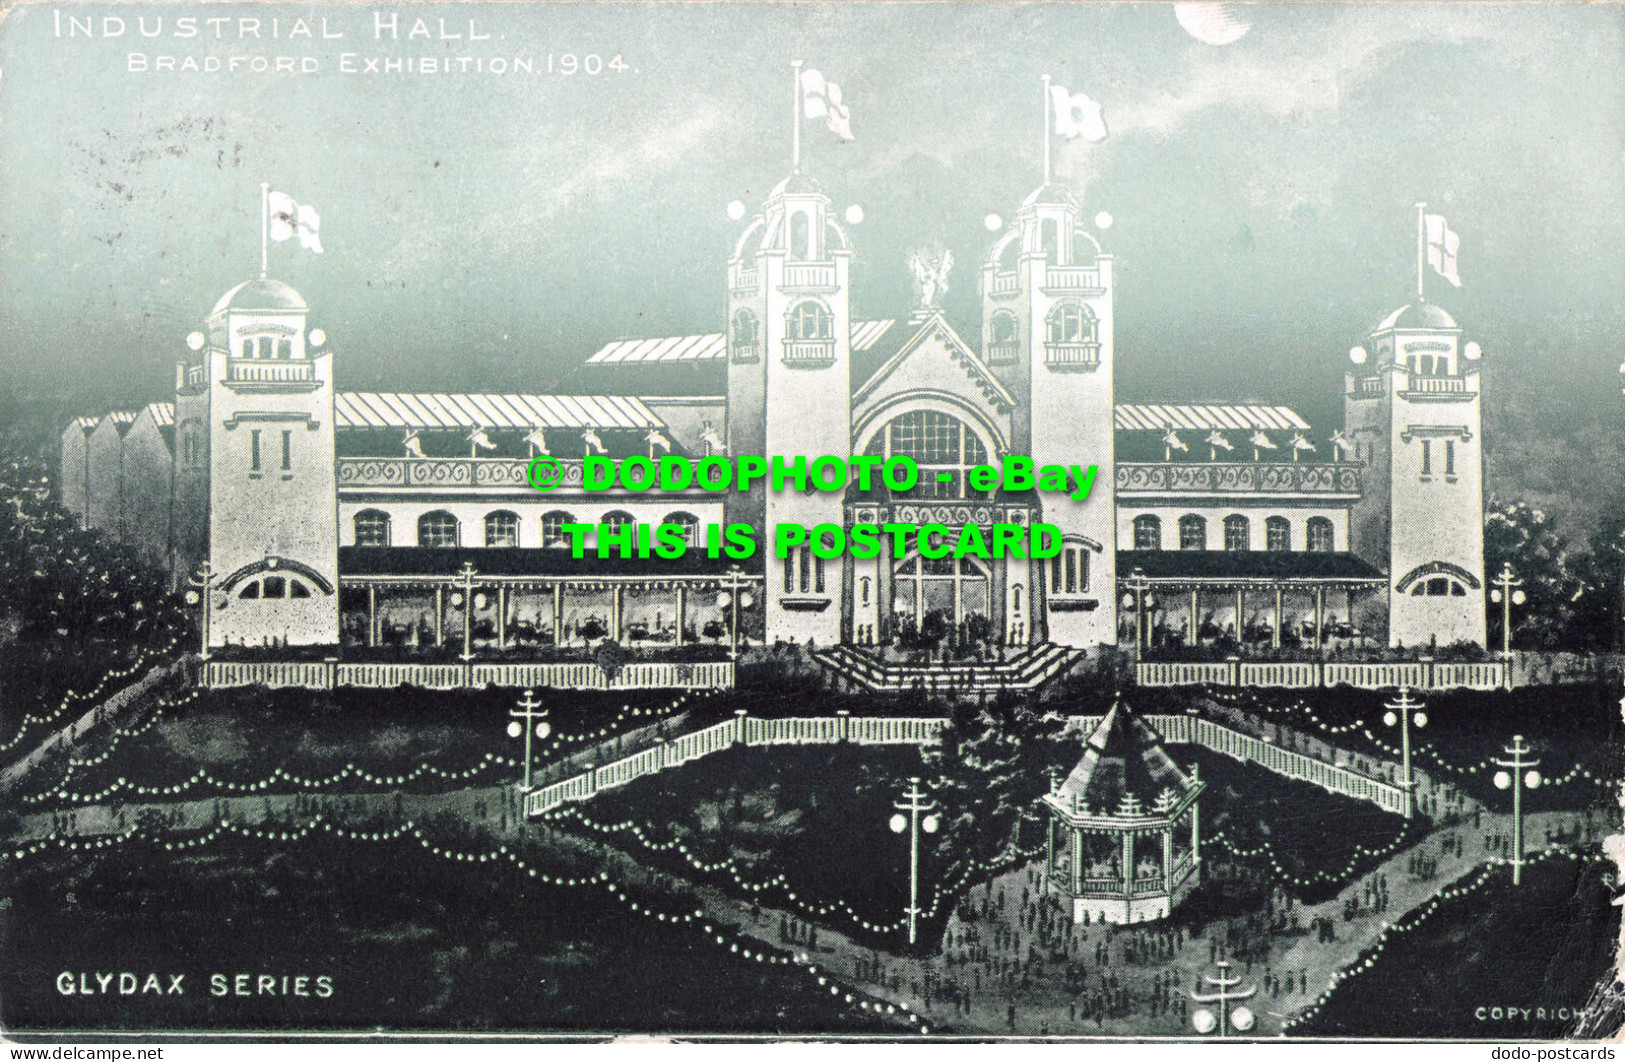 R550020 Industrial Hall. Bradford Exhibition 1904. Glydax Series. 1904 - World